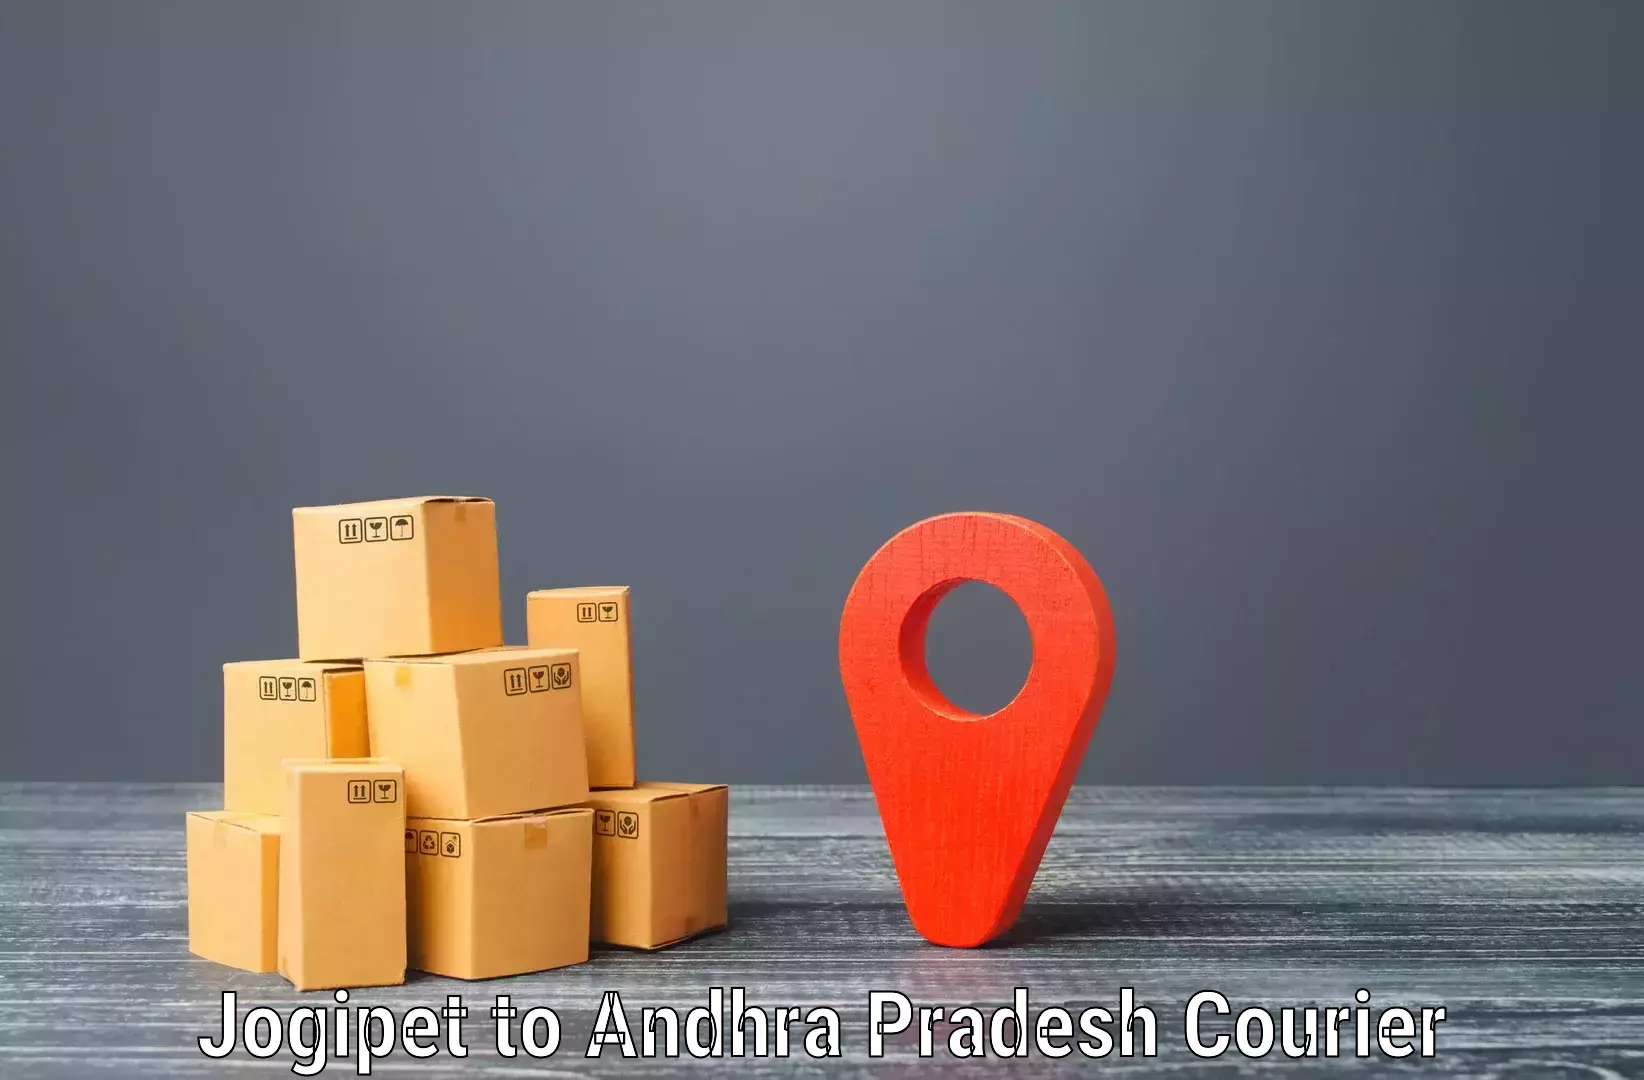 Full-service courier options Jogipet to Kalyandurg